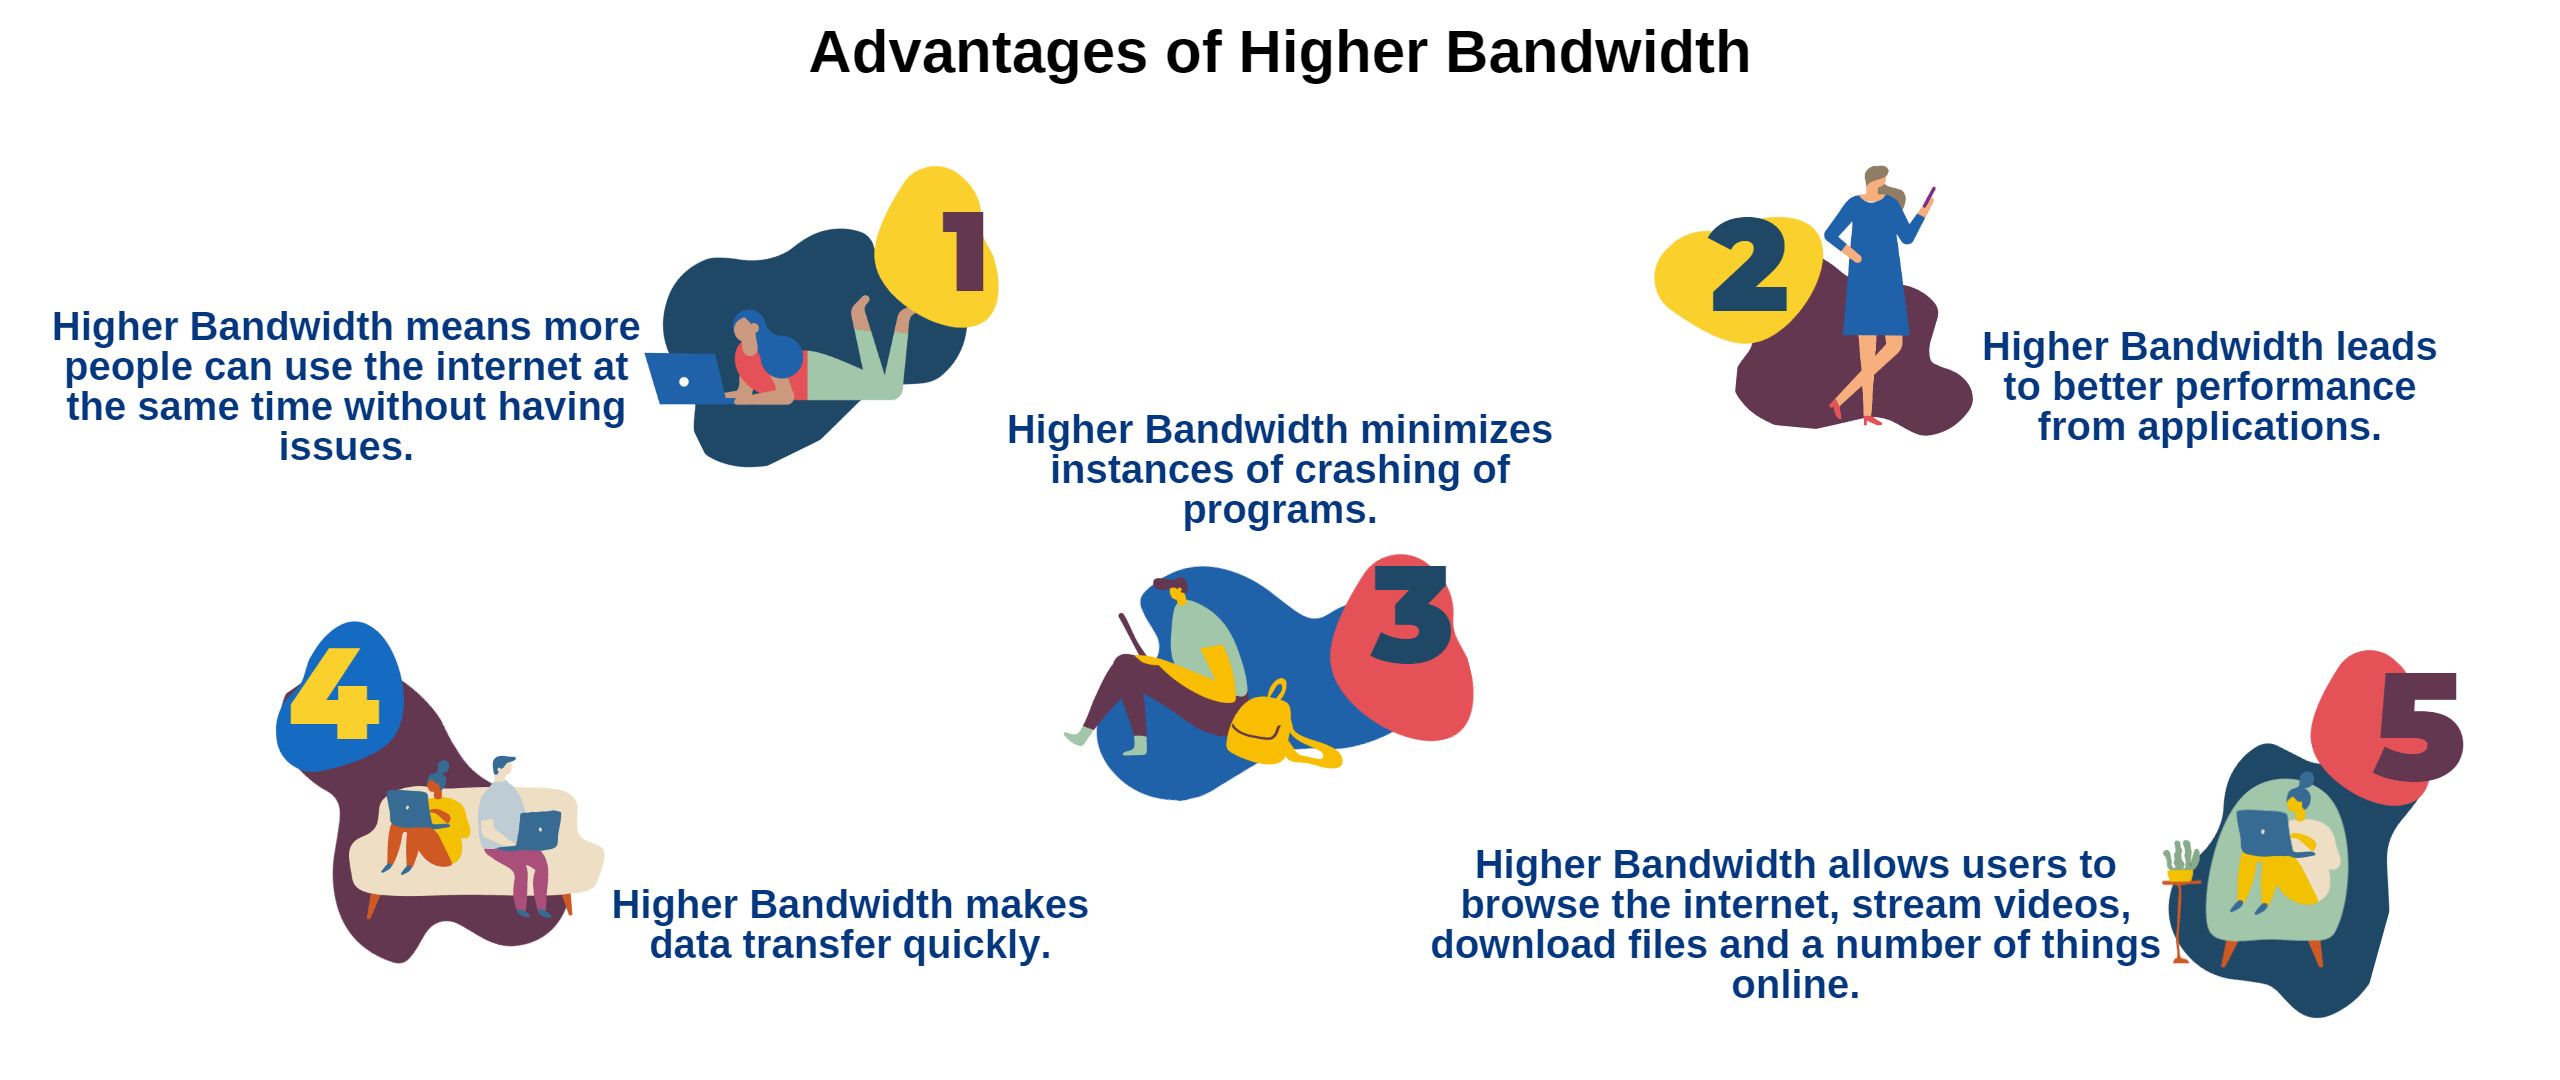 Advantages of higher bandwidth